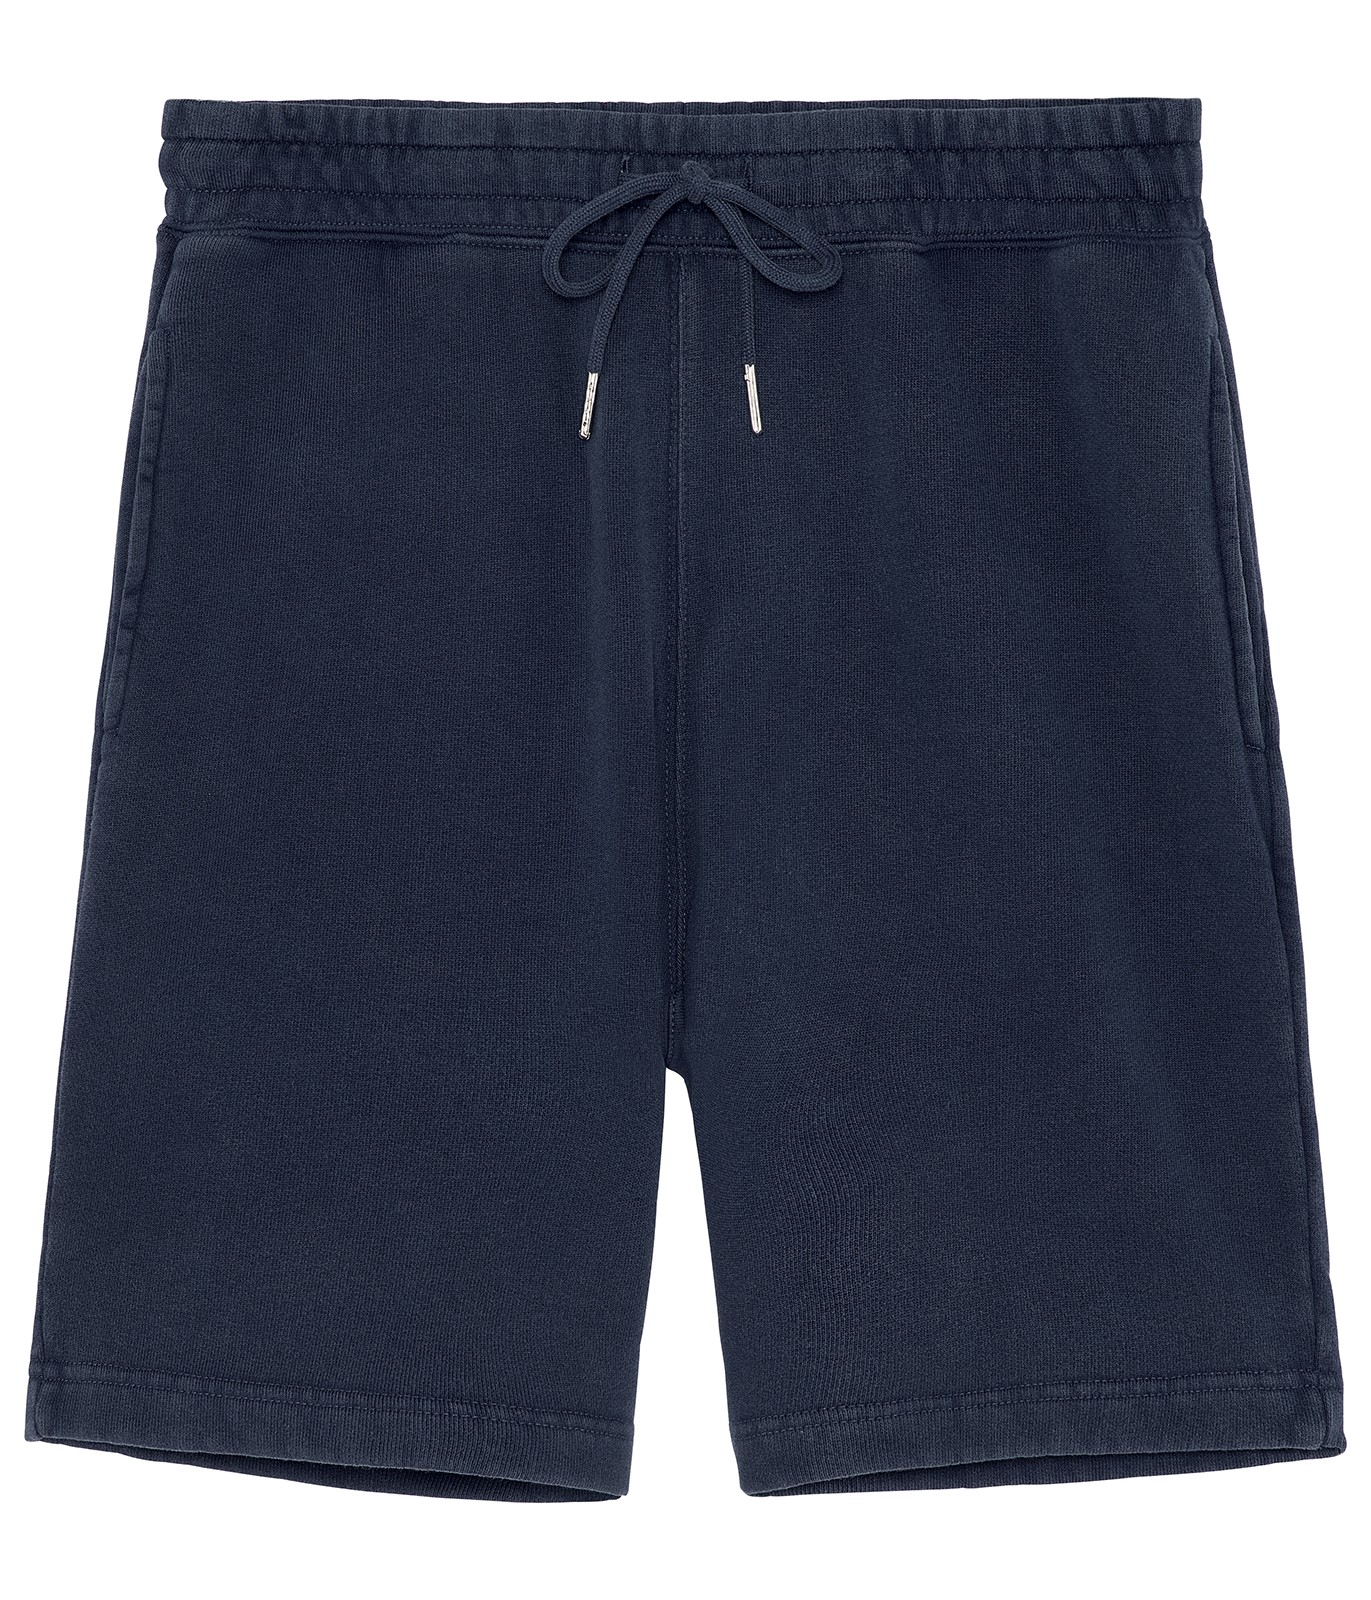 https://www.europann.com/10580-thickbox_default/josh-navy-blue-fleece-shorts.jpg